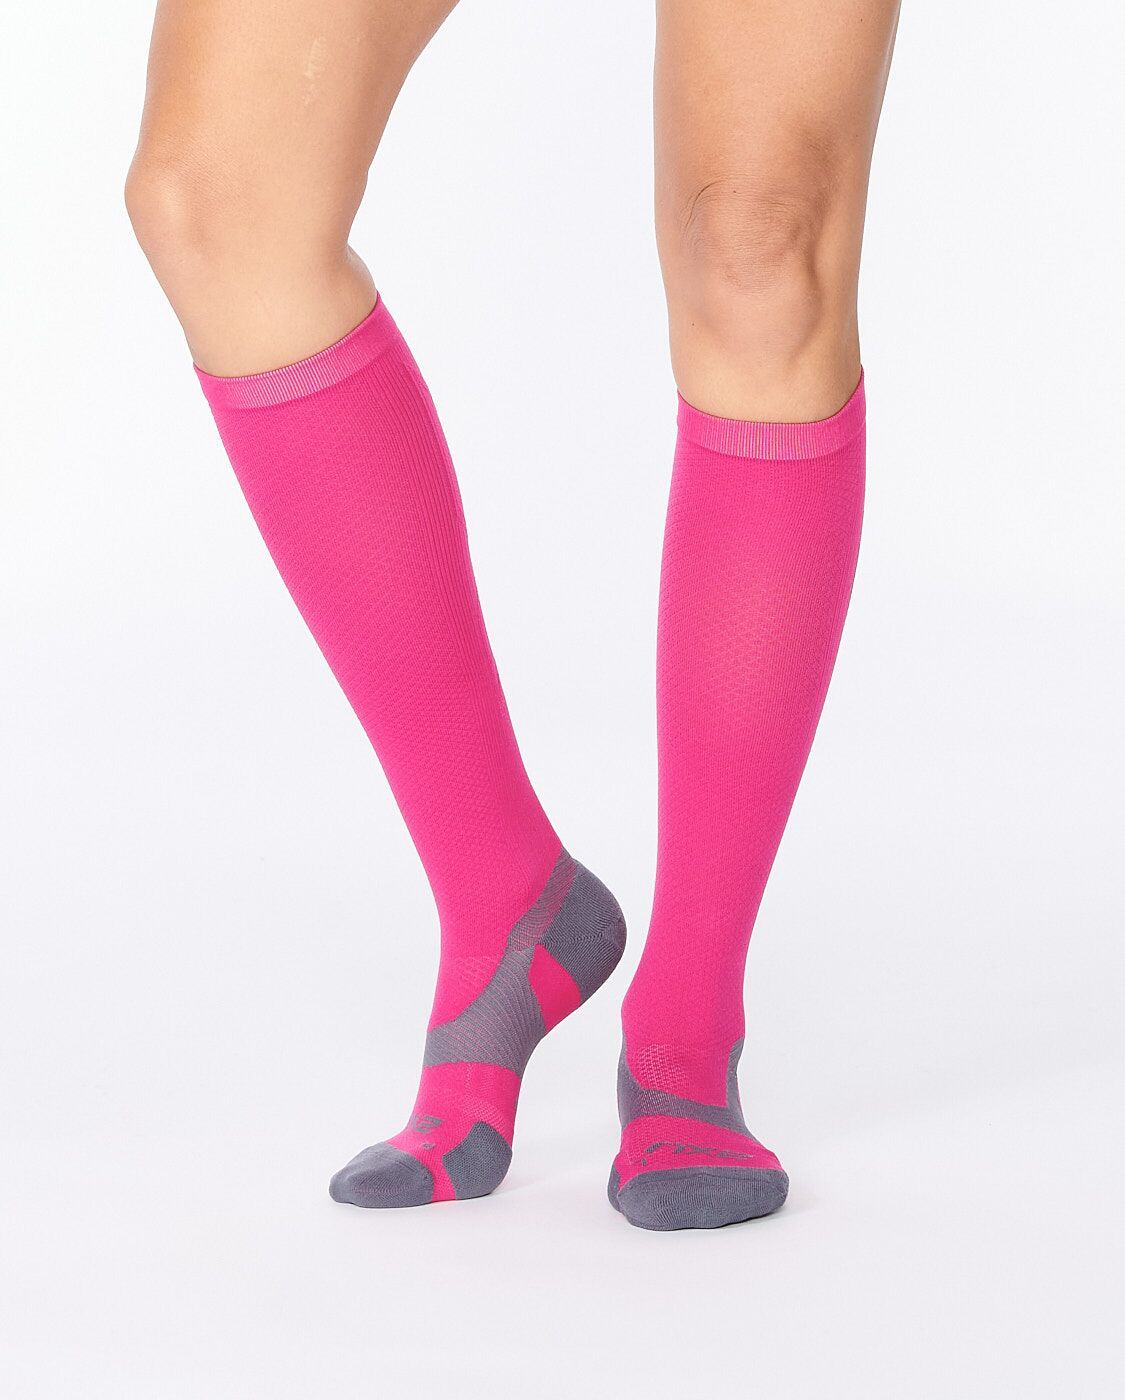 2XU South Africa - Vectr Light Cushion Full Length Socks - Hot Pink/Grey